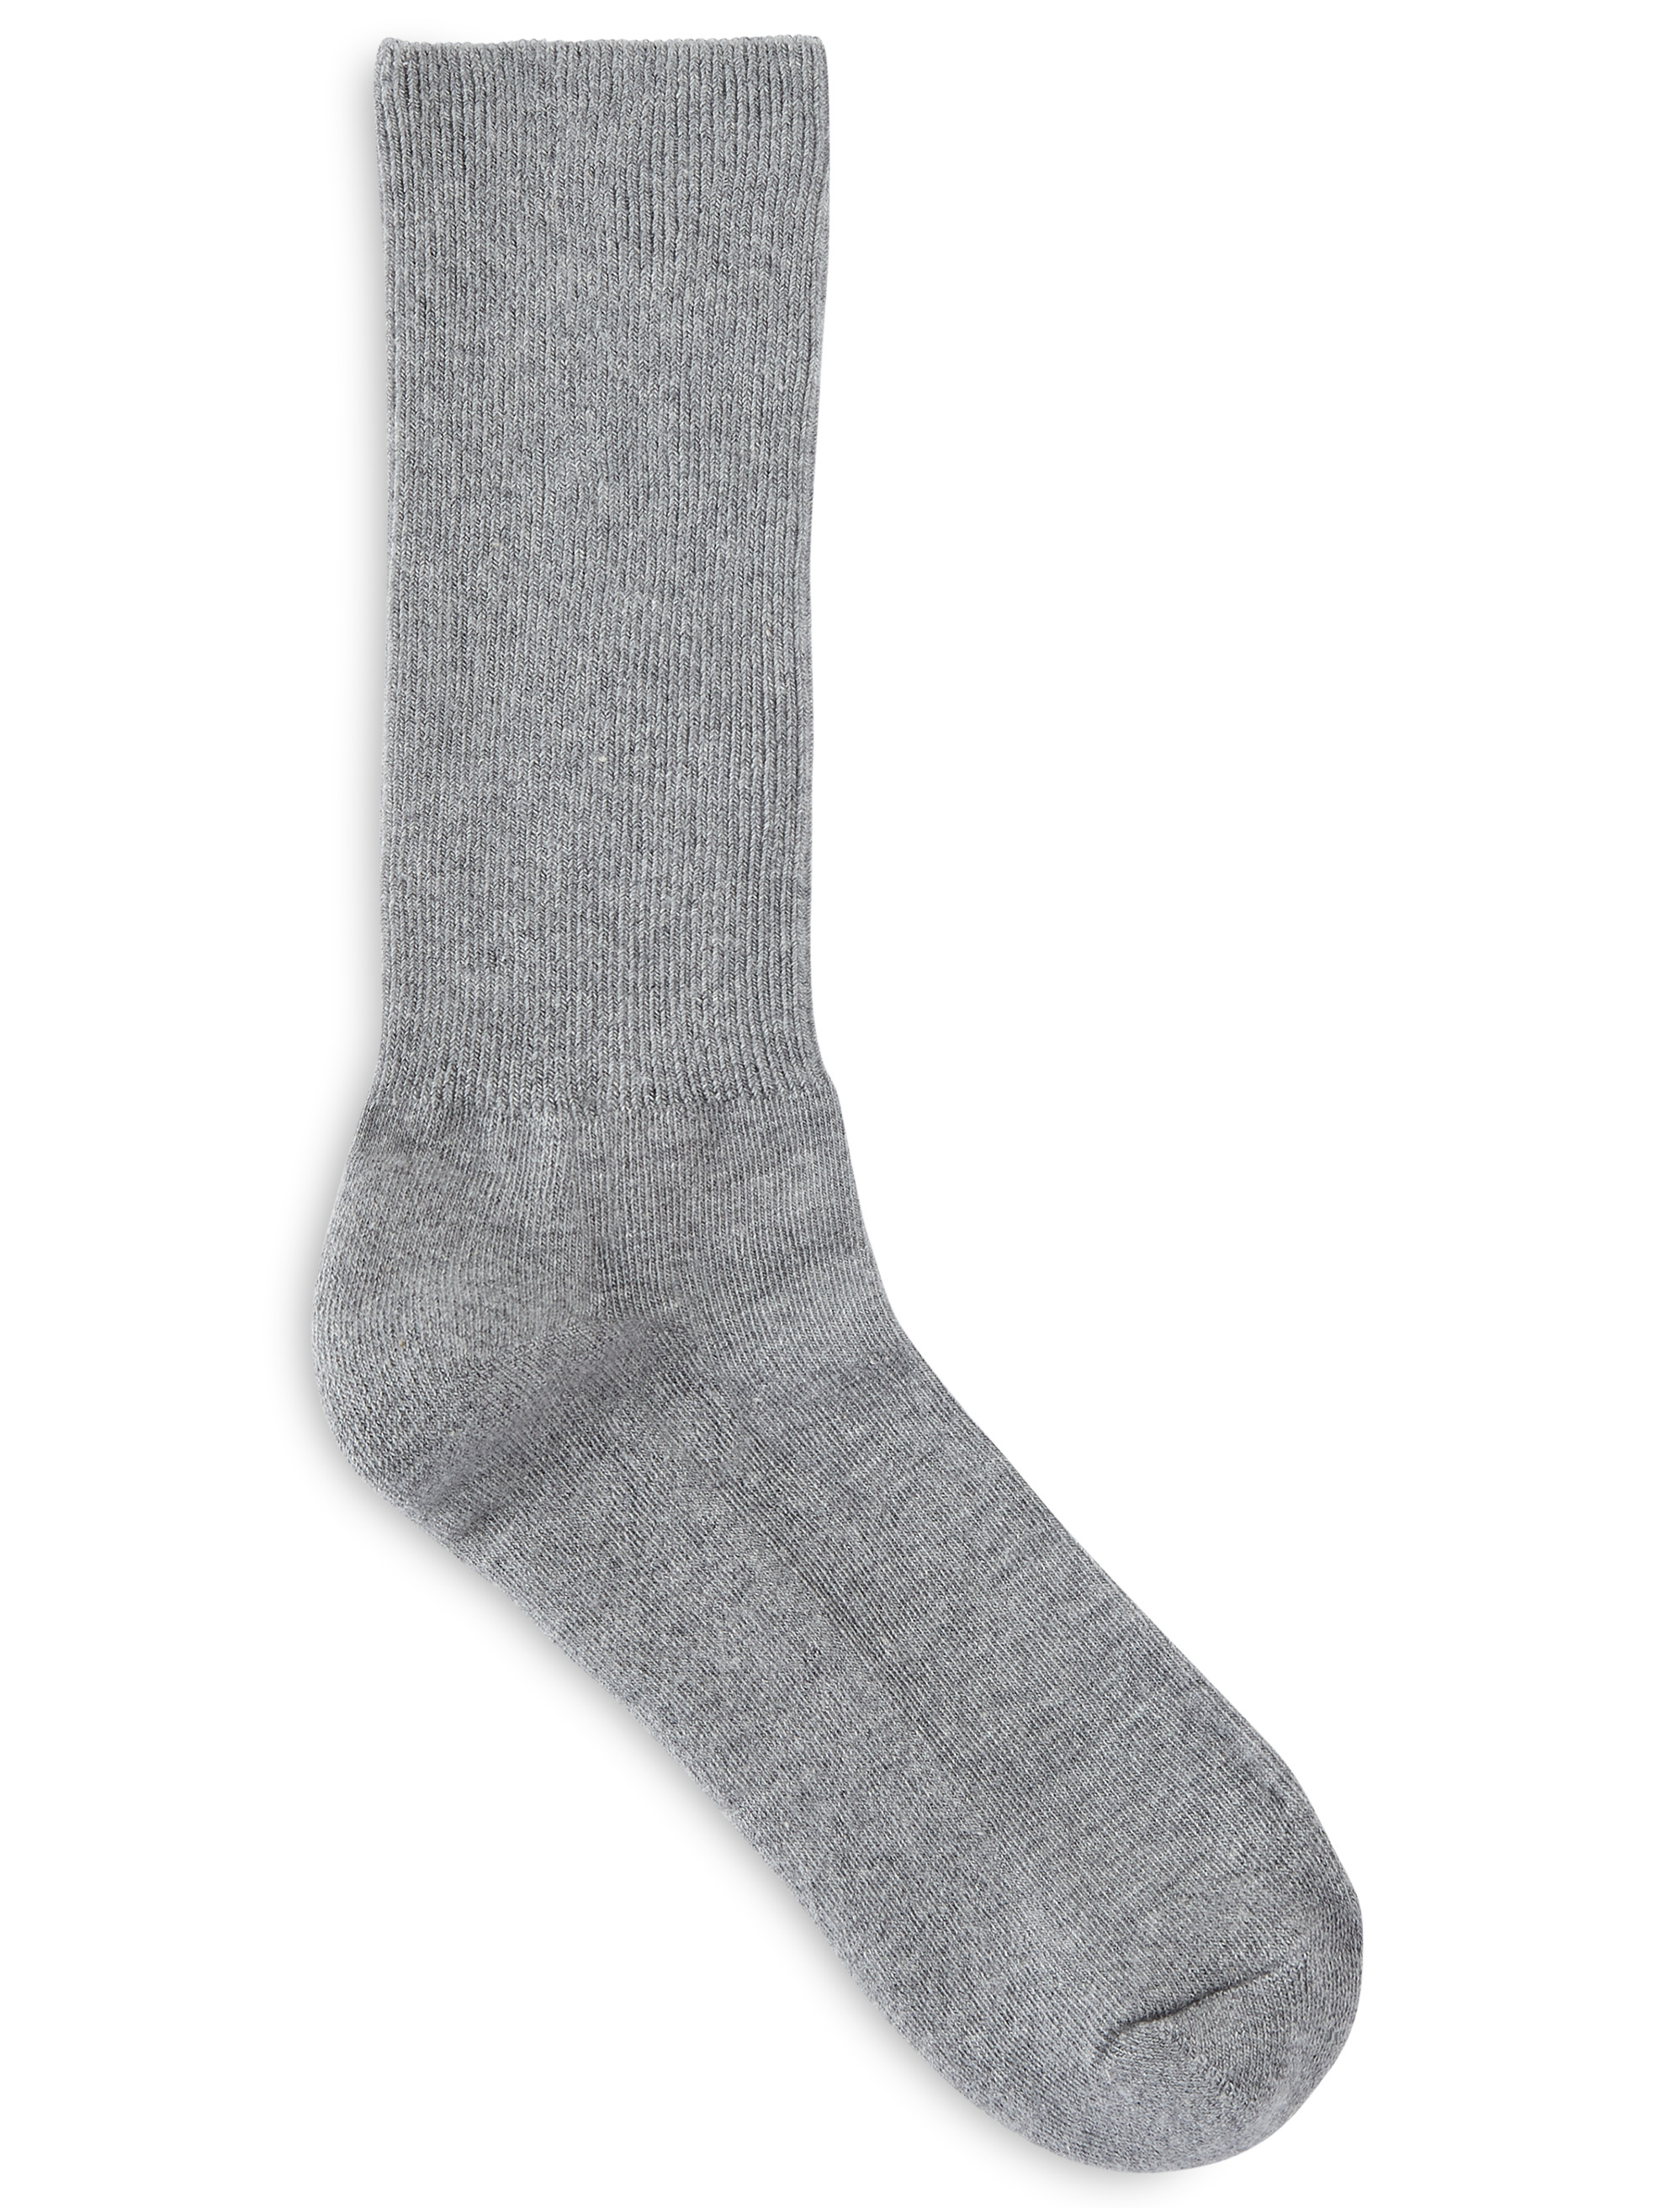 EuroChoice Comfort Stretch Socks Casual Male XL Big & Tall | eBay